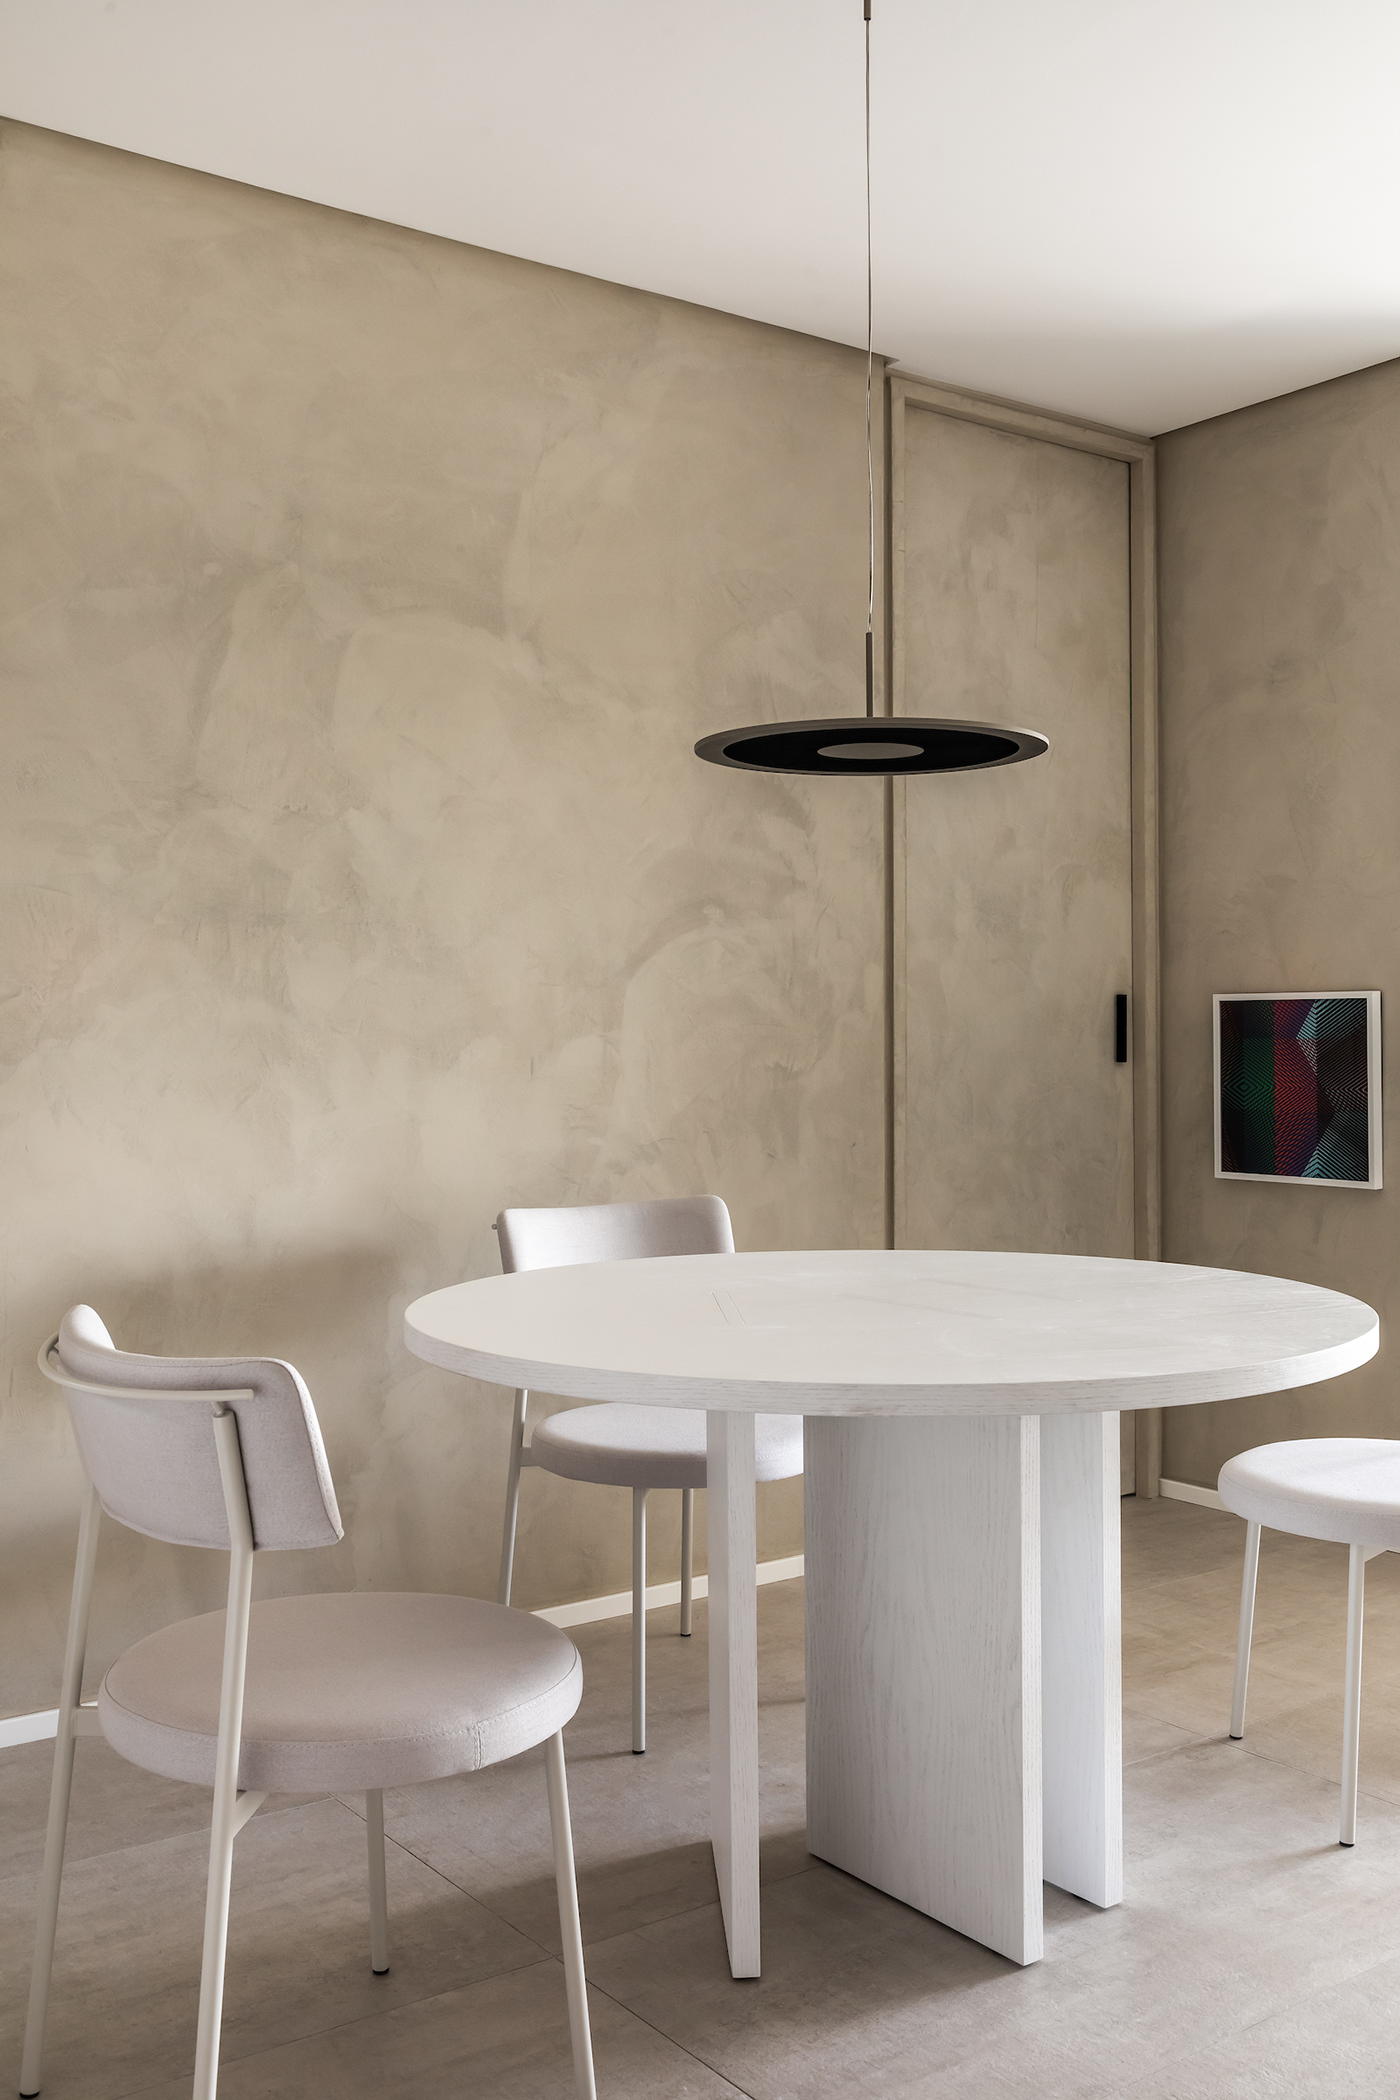 architecture arquitectura ARQUITETURA interior design  Interior minimal minimalist modern kitchen design